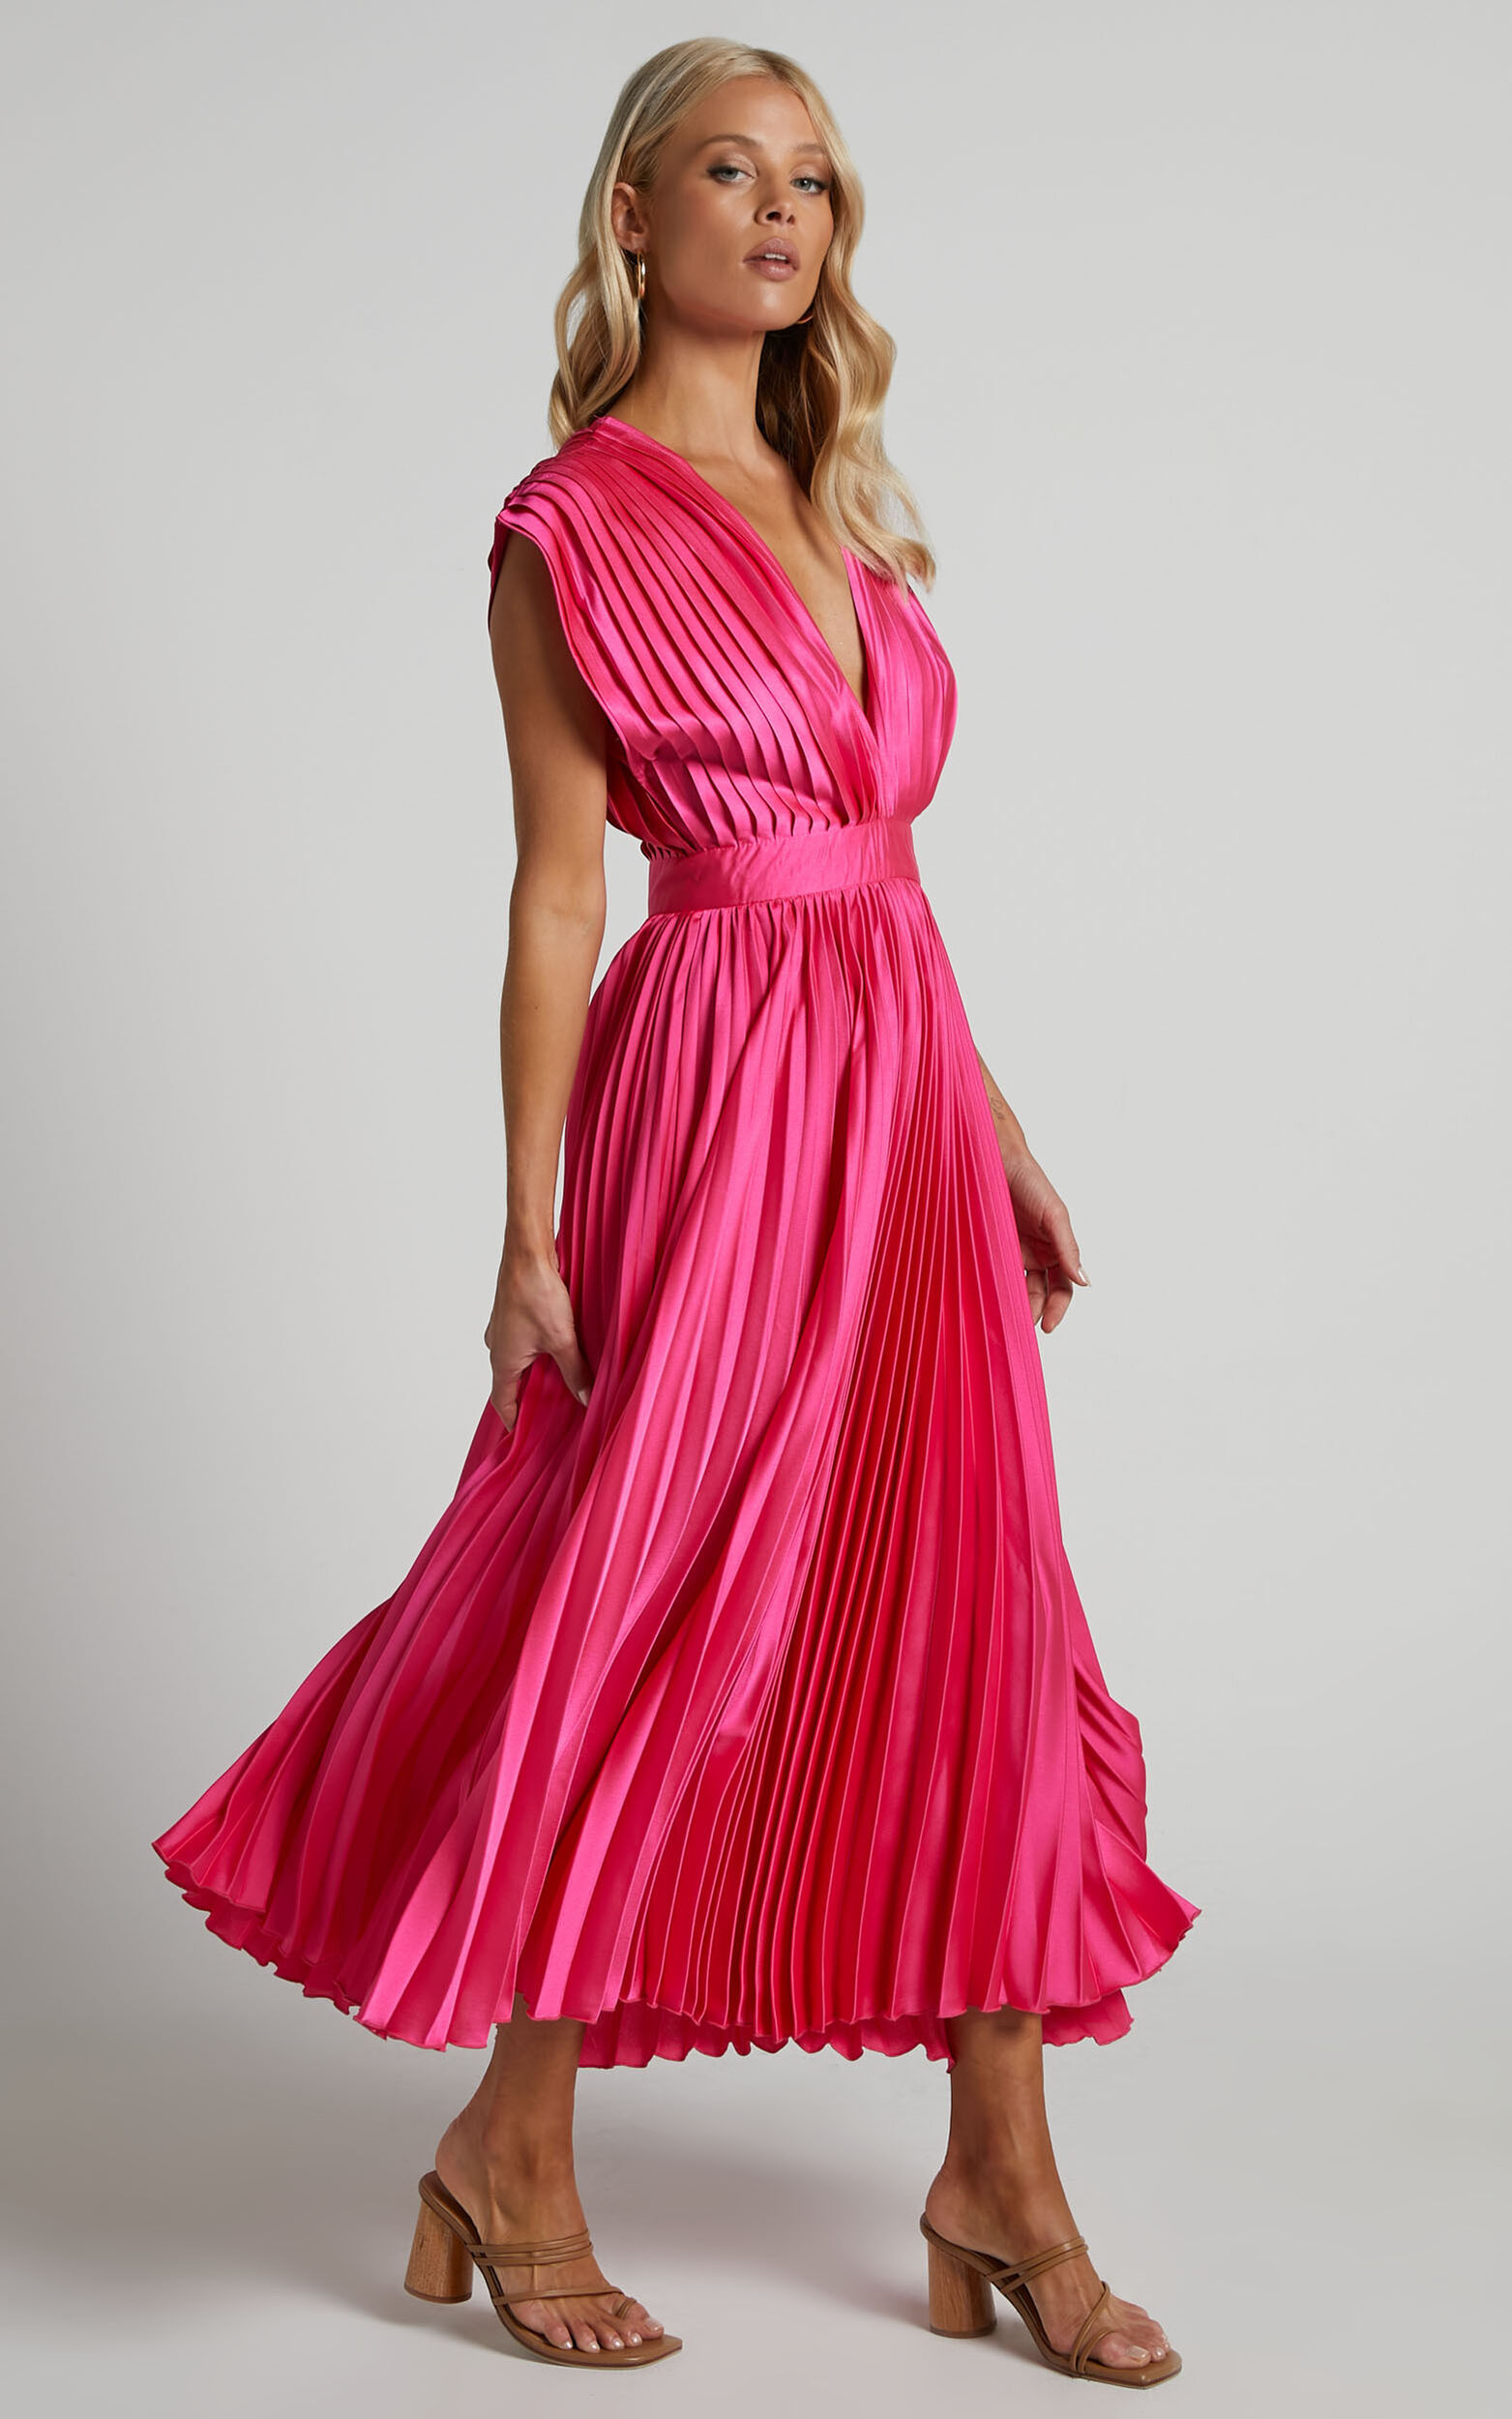 Della Midi Dress - Plunge Neck Short Sleeve Pleated Dress in Hot